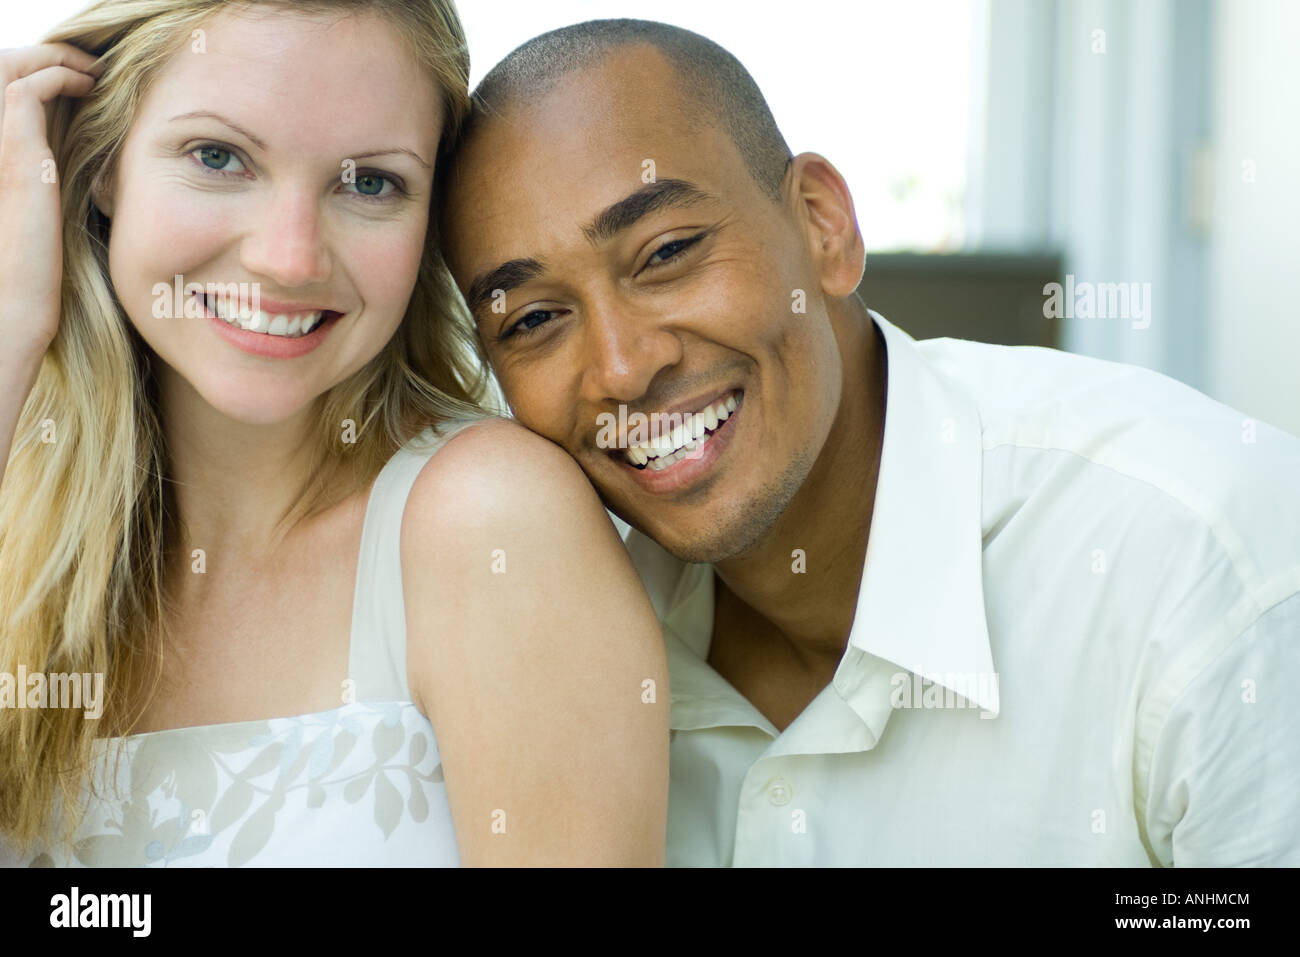 Bob jones policy on interracial dating